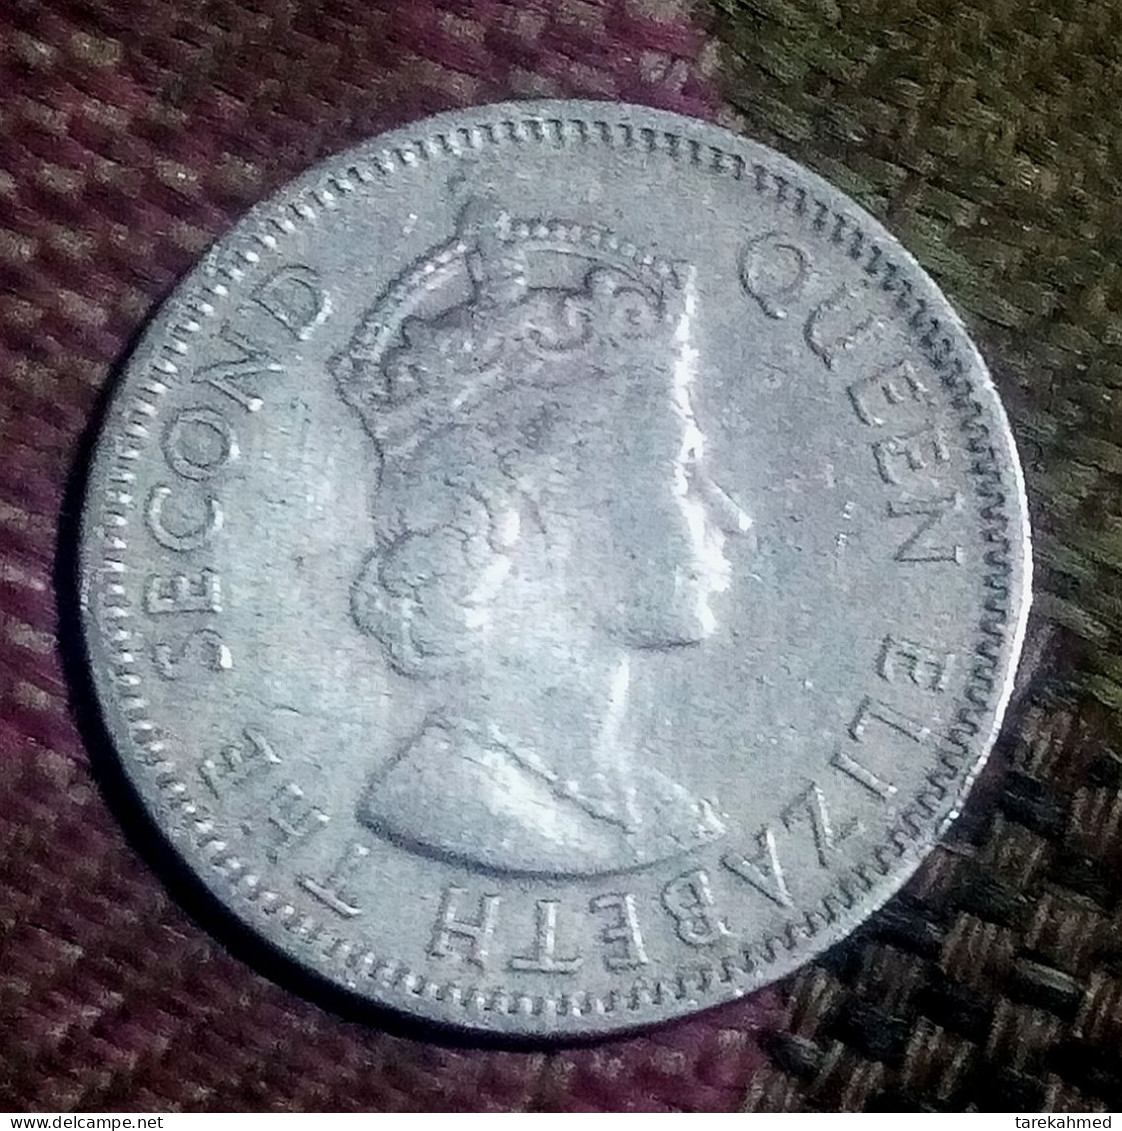 NIGERIA 1959, 1 Shilling - Elizabeth II (1st Portrait) KM# 5 - Agouz - Nigeria